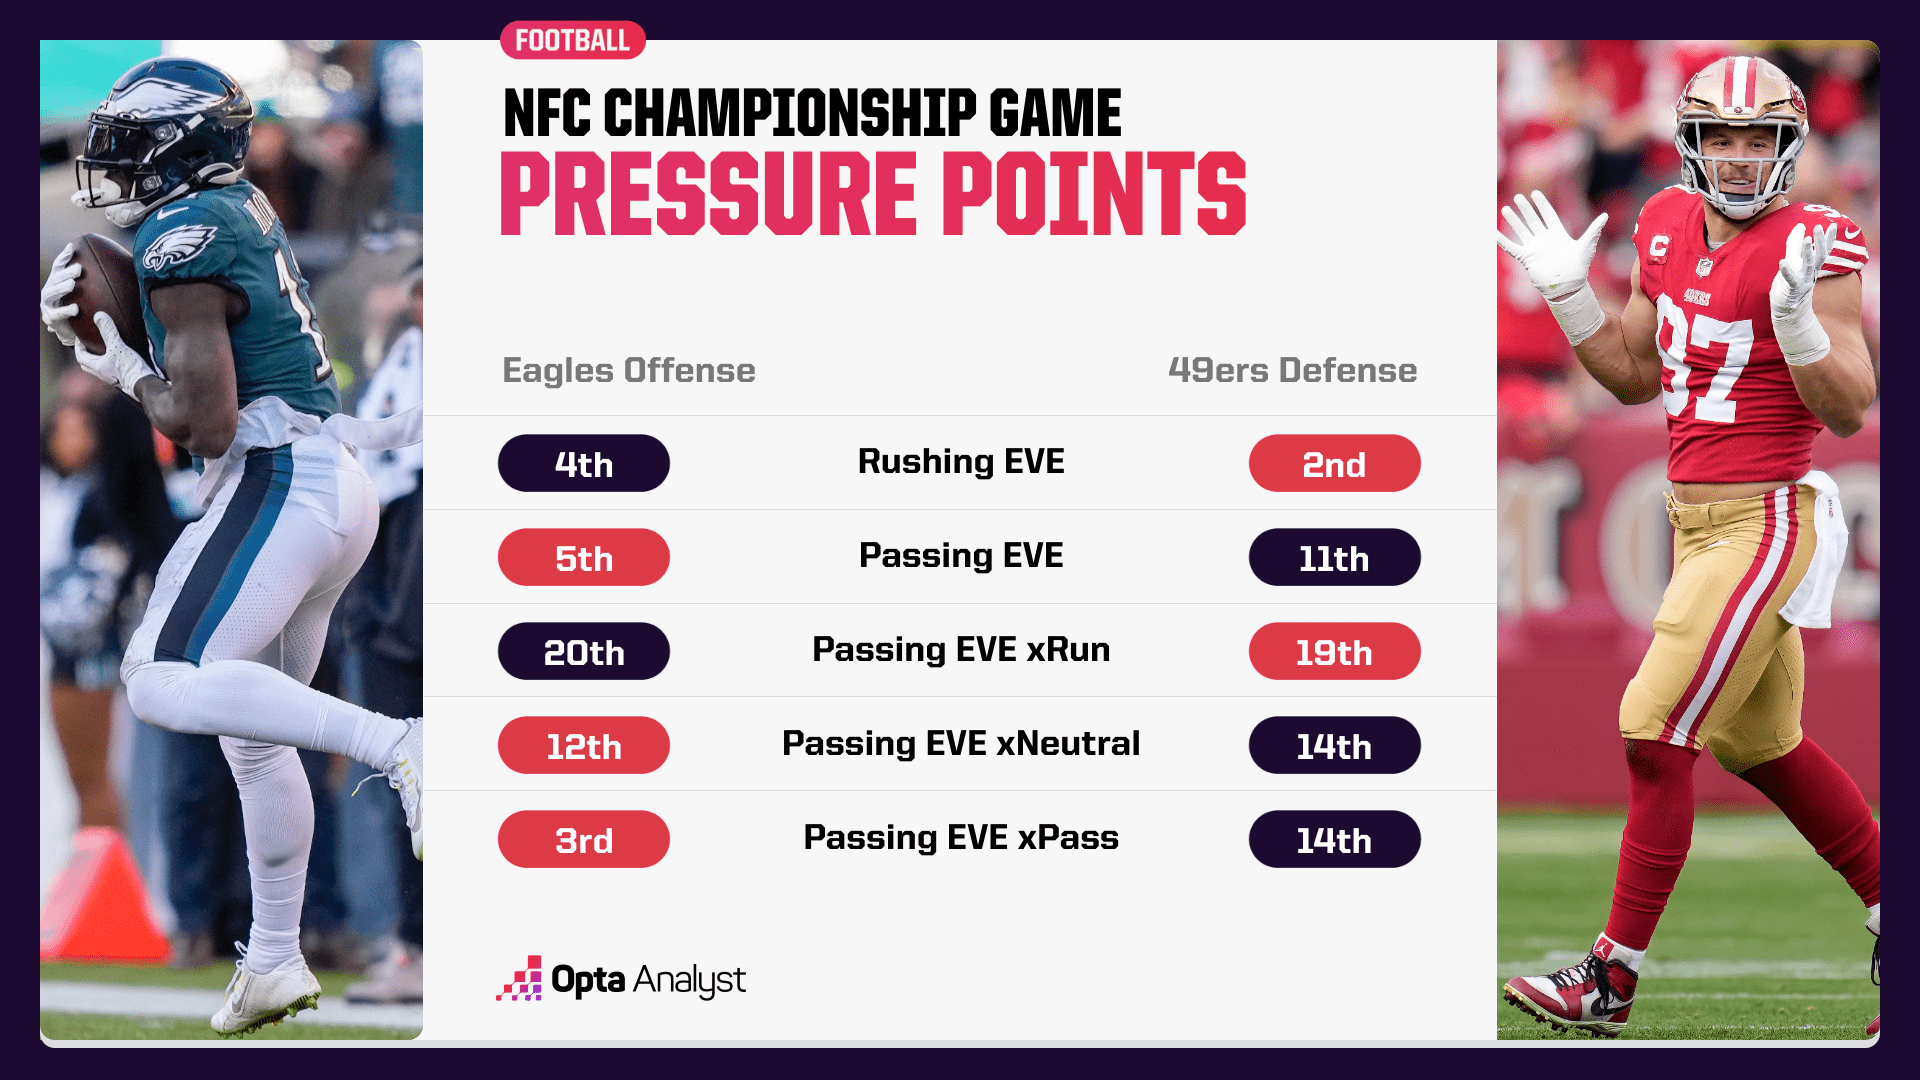 NFC championship game comparison